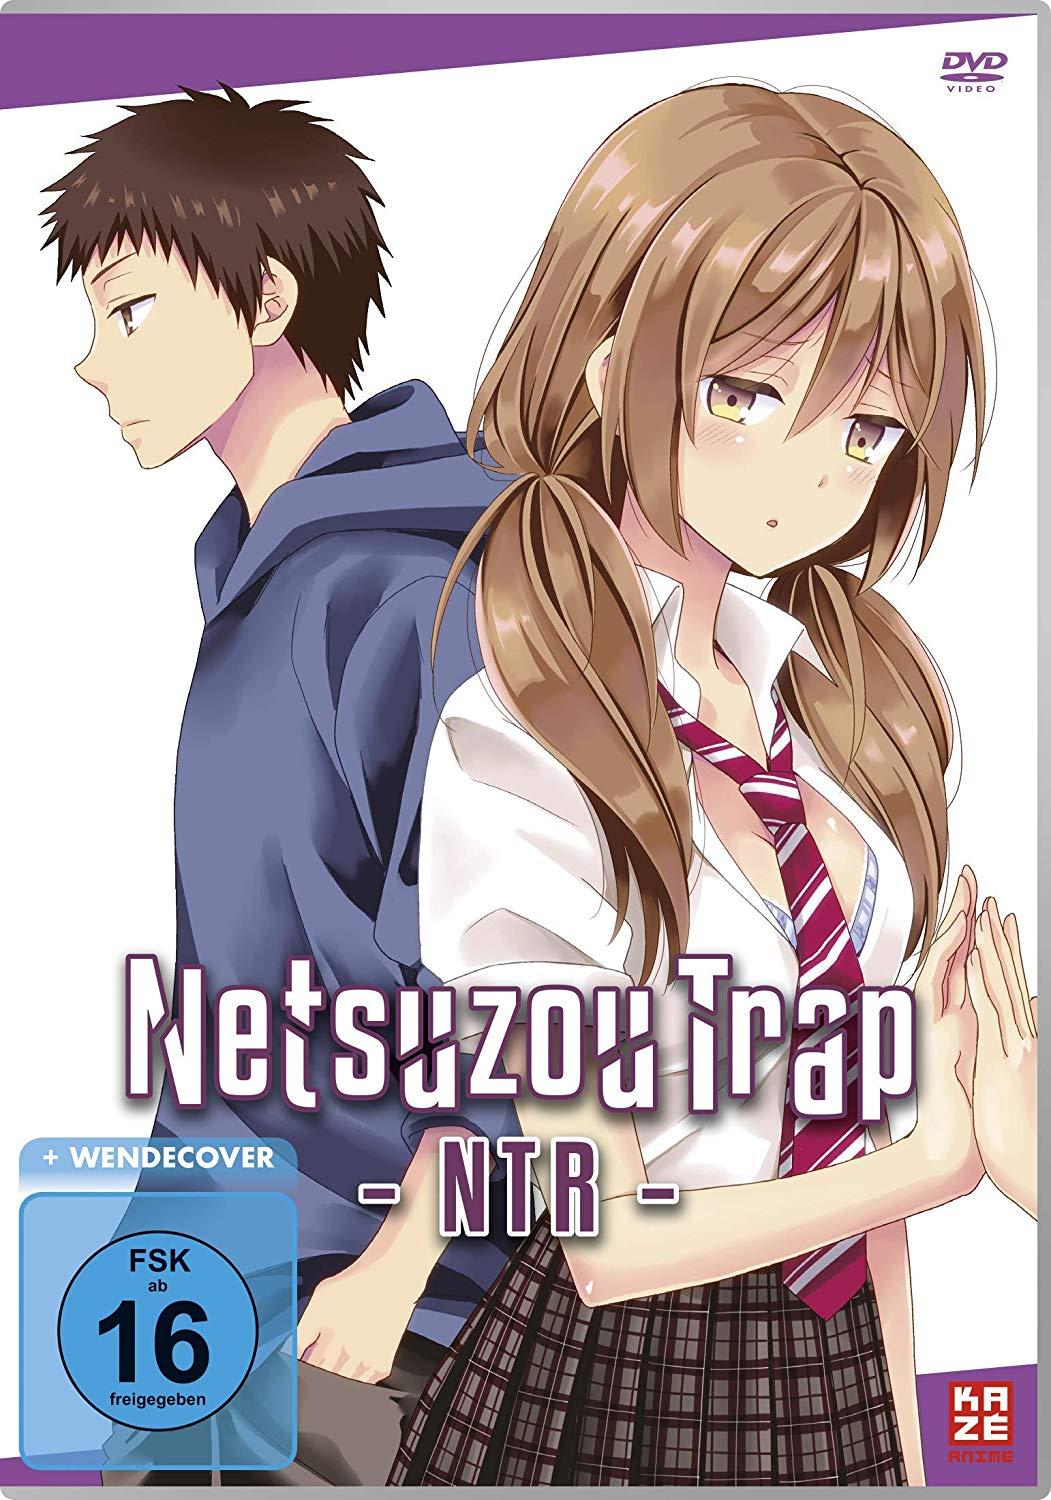 NTR: Netsuzou Trap Gesamtausgabe: Movies & TV